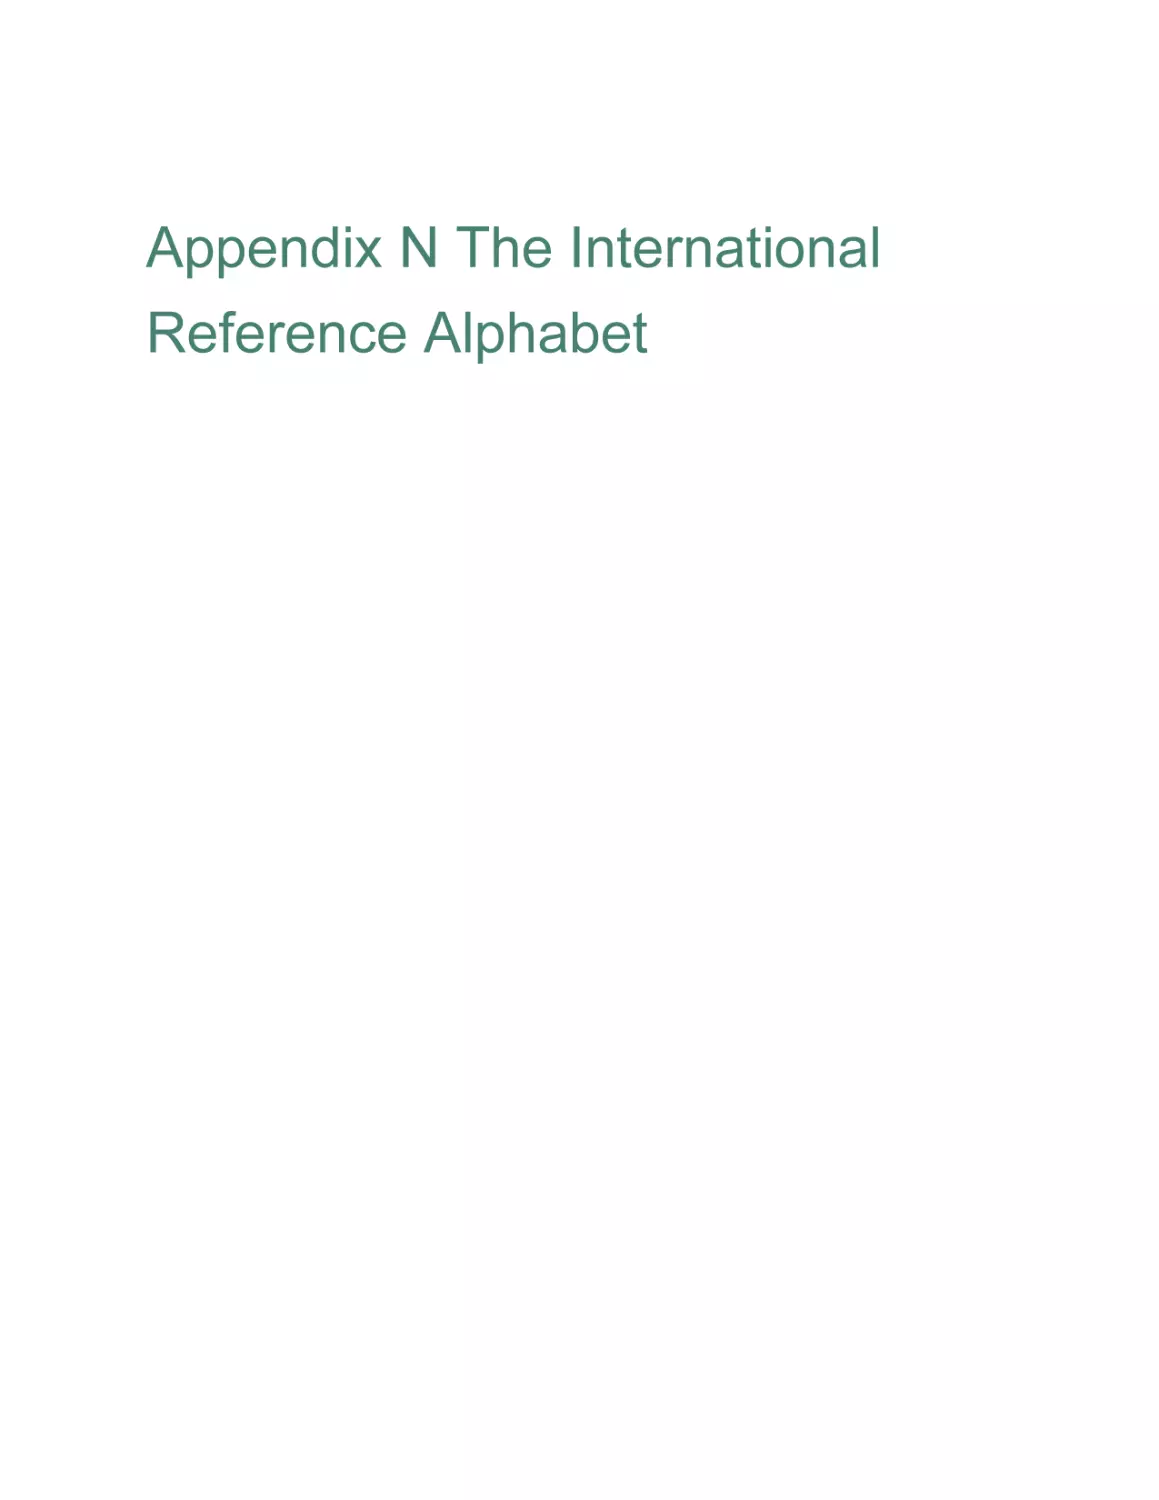 Appendix N The International Reference Alphabet